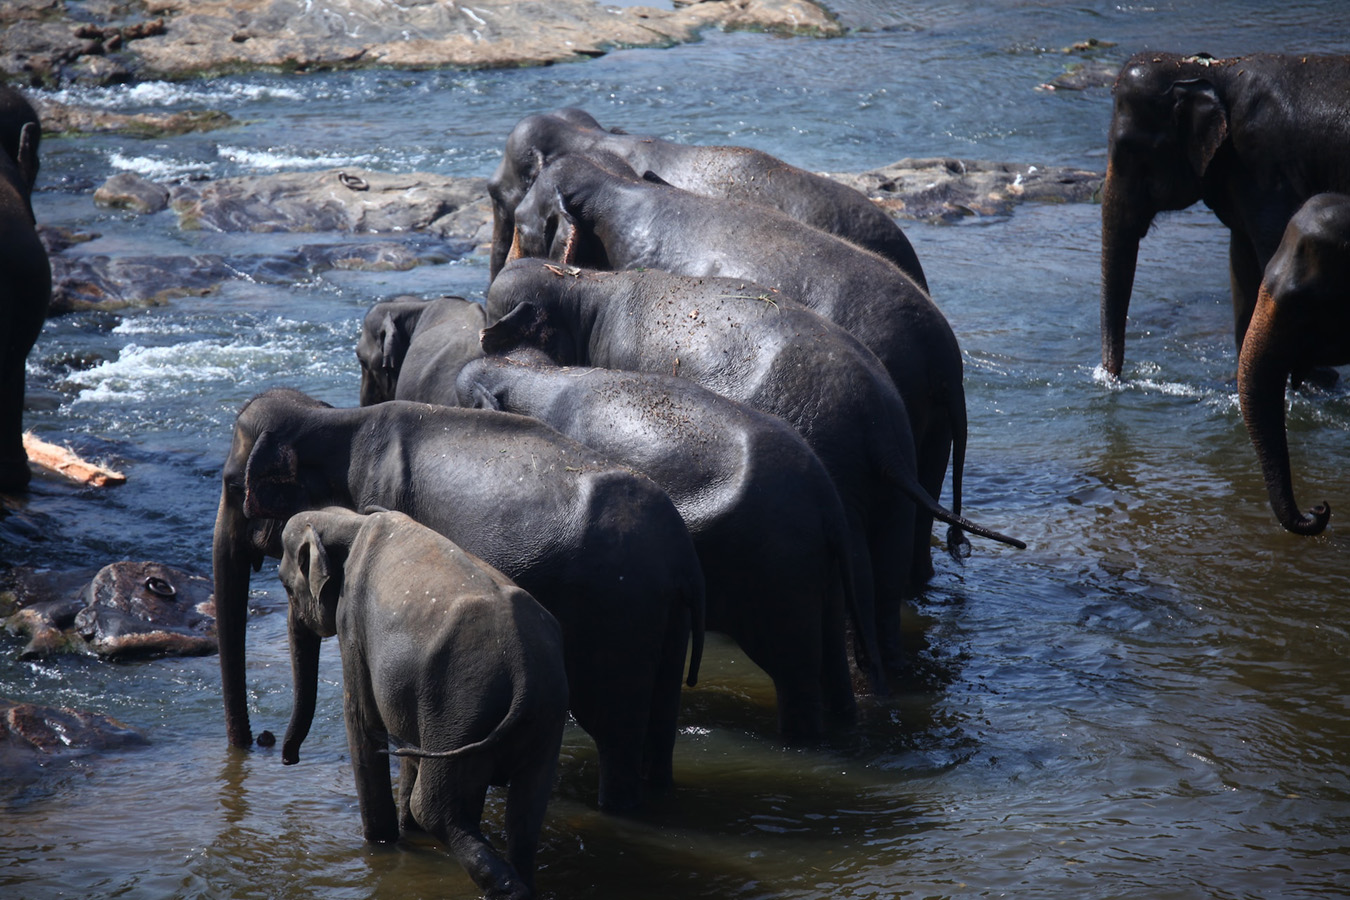 Kandy, Pinnawala Elephant Orphanage & Peradeniya Botanical Gardens Day Tour